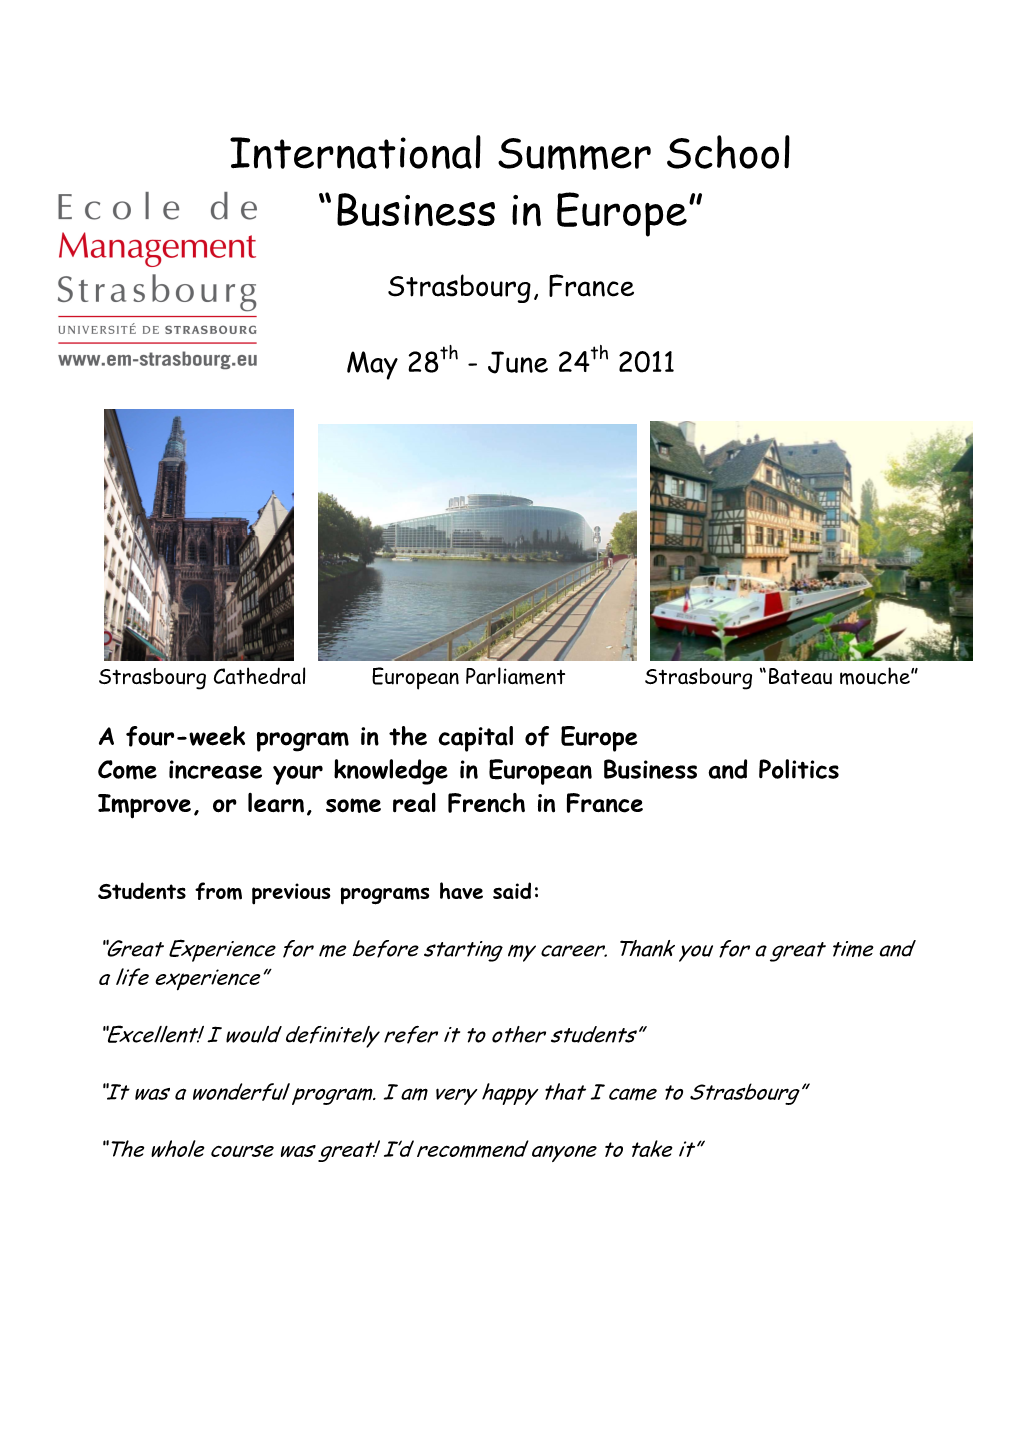 International Summer School in European Business Leaflet11